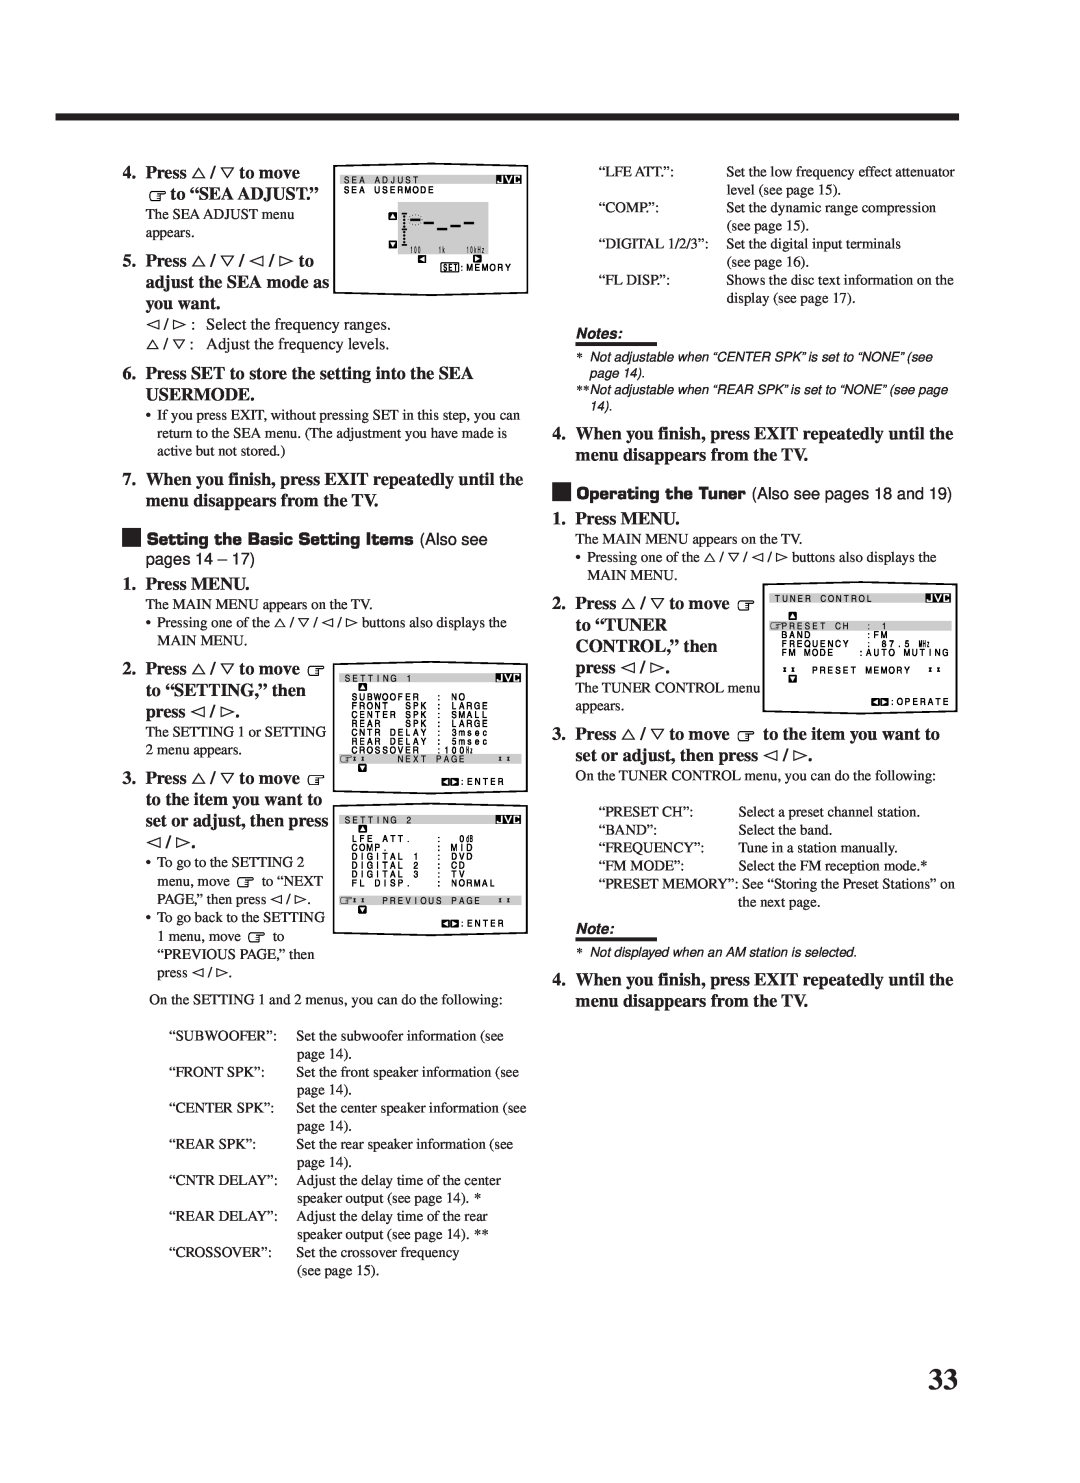 JVC RX-7000VBK manual Press MENU 